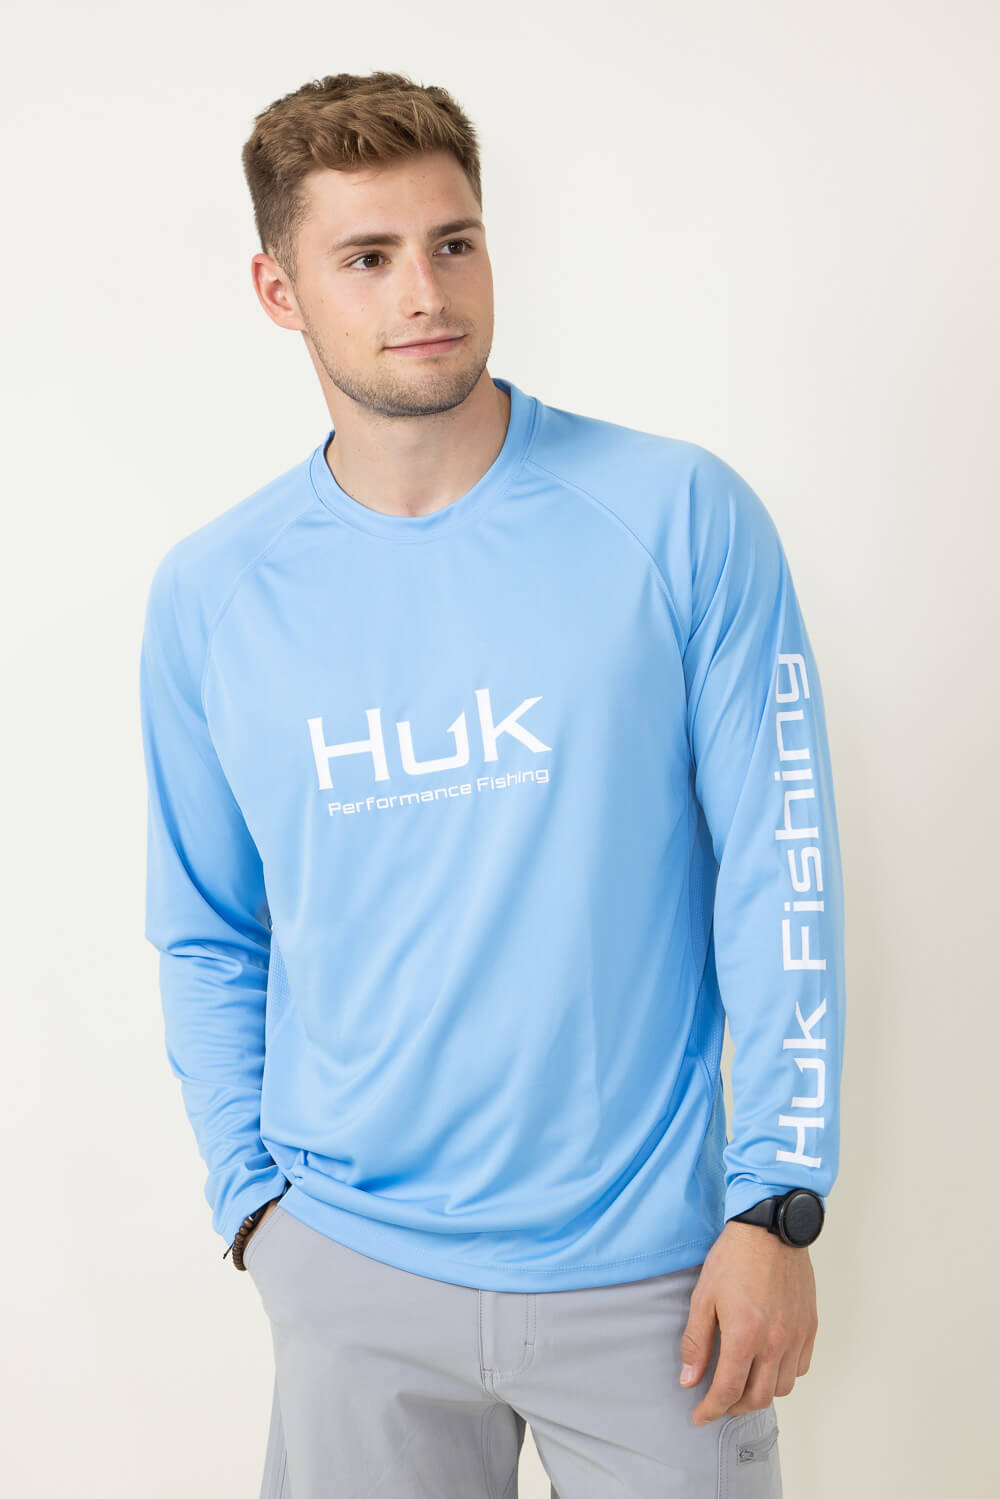 HUK Running Lakes Vented Pursuit Men's Fishing Long Sleeve T-Shirt